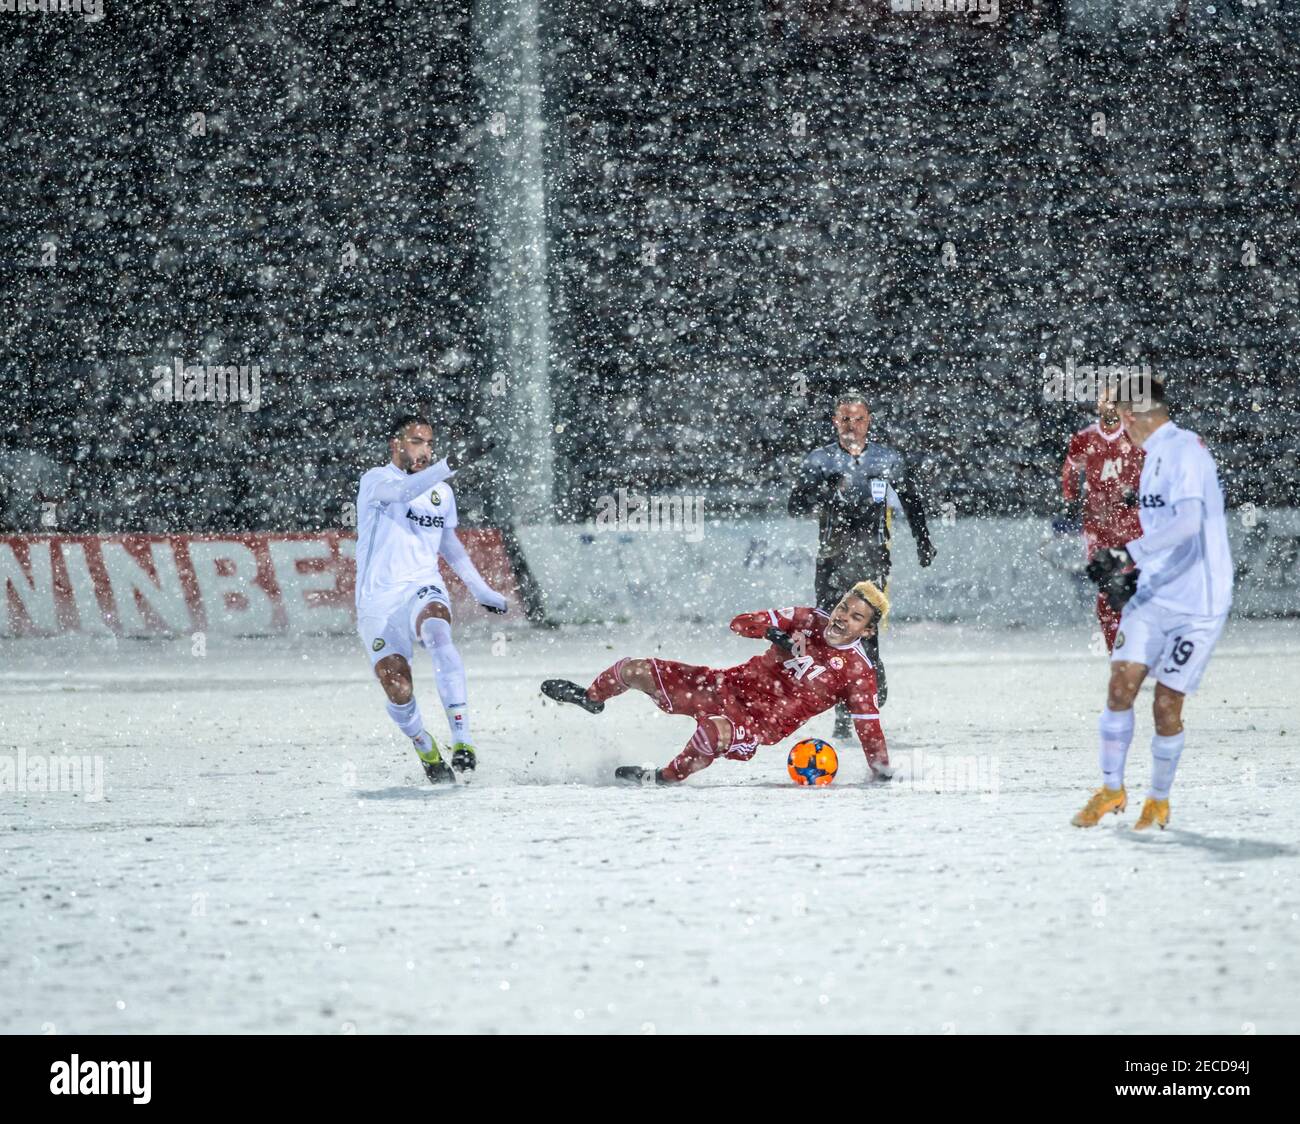 Sofia, Bulgaria - Feb 13 2021: Penaranda falling with the ball on the snowy ground during a snowy football match between CSKA Sofia and Slavia Stock Photo